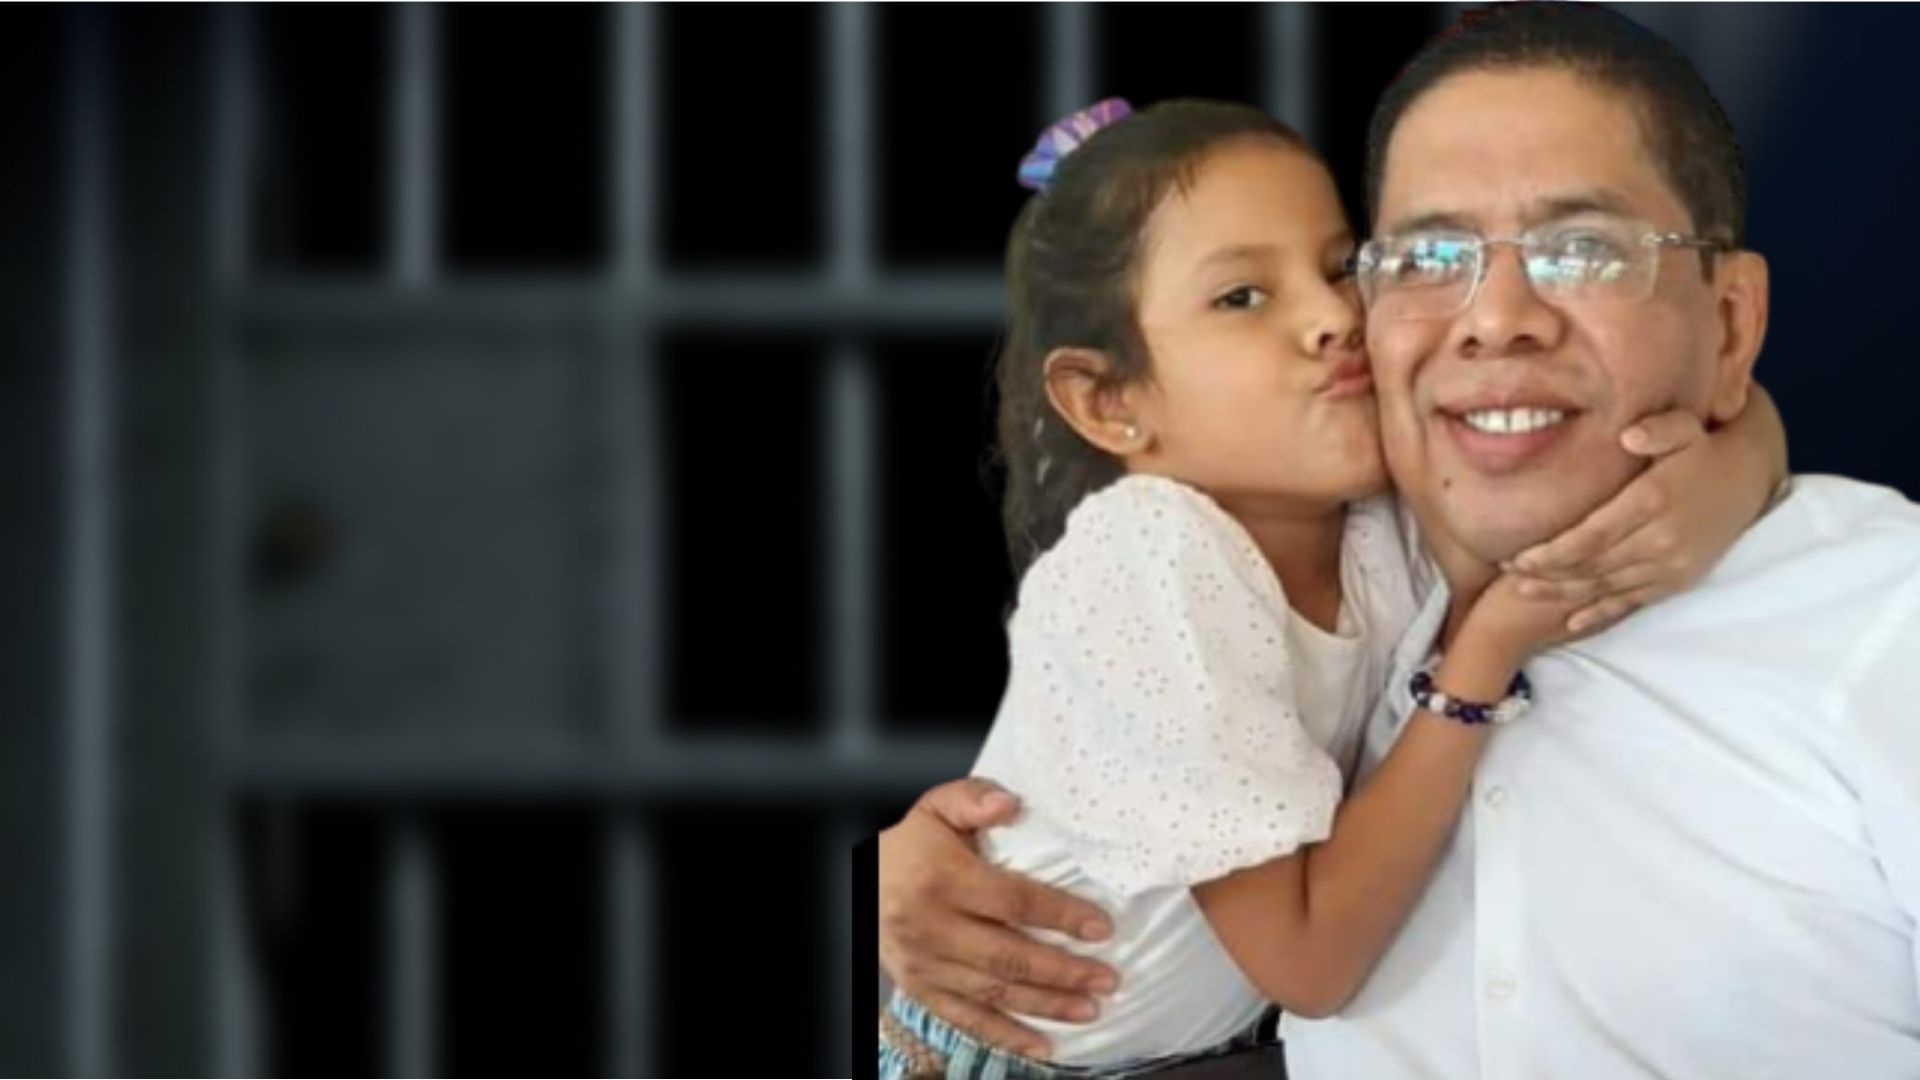 Political prisoner Miguel Mendoza has not seen his daughter in 420 days